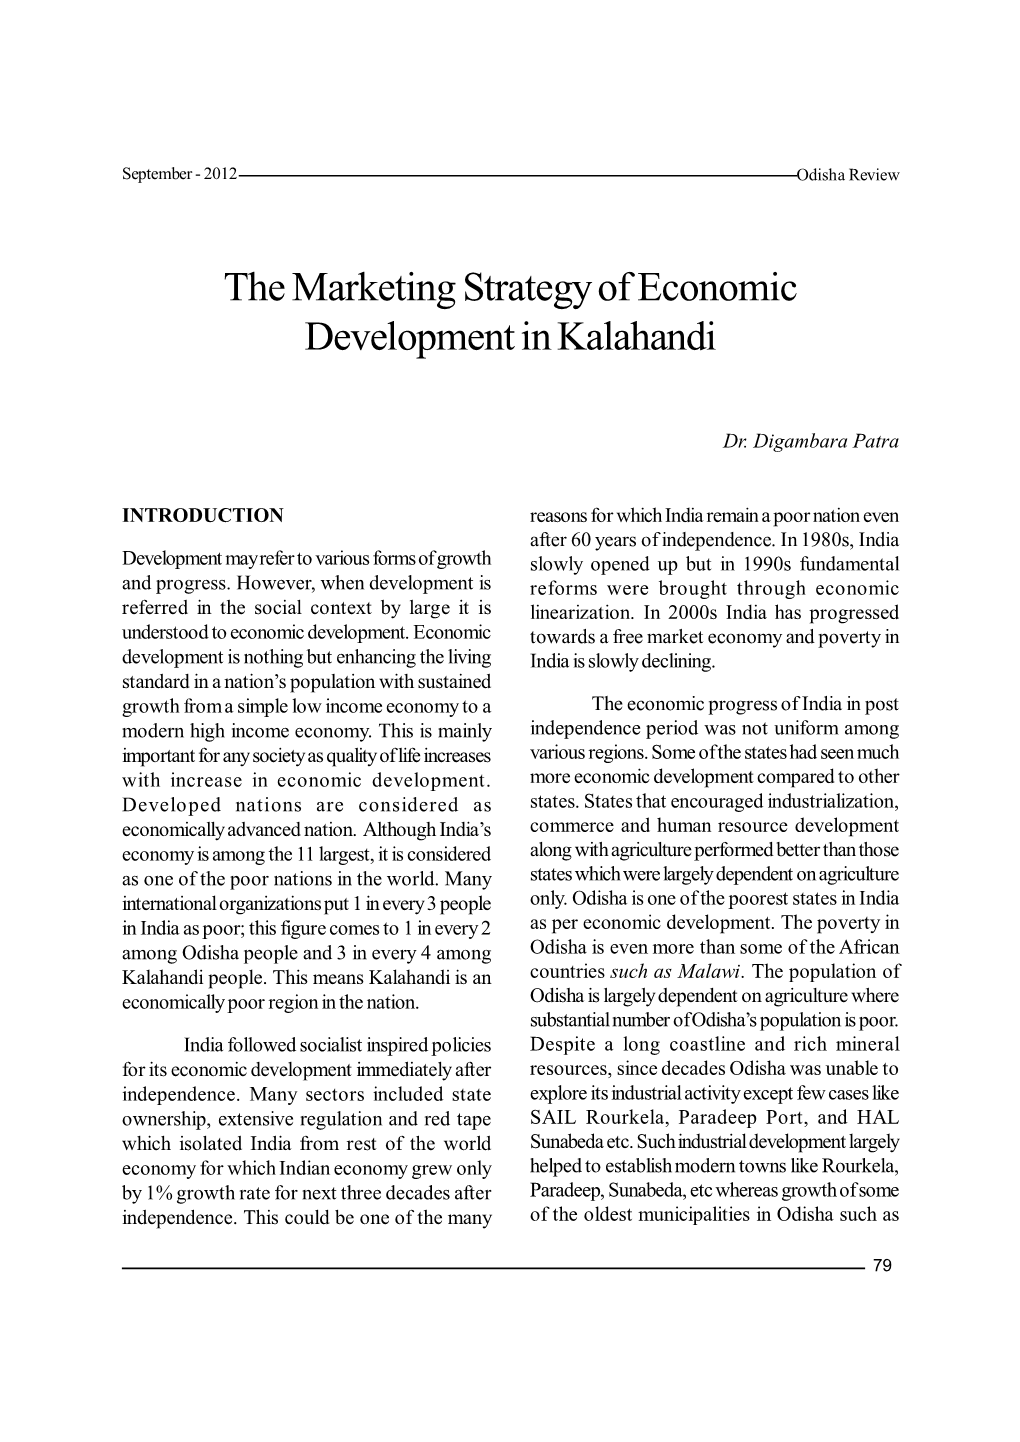 The Marketing Strategy of Economic Development in Kalahandi